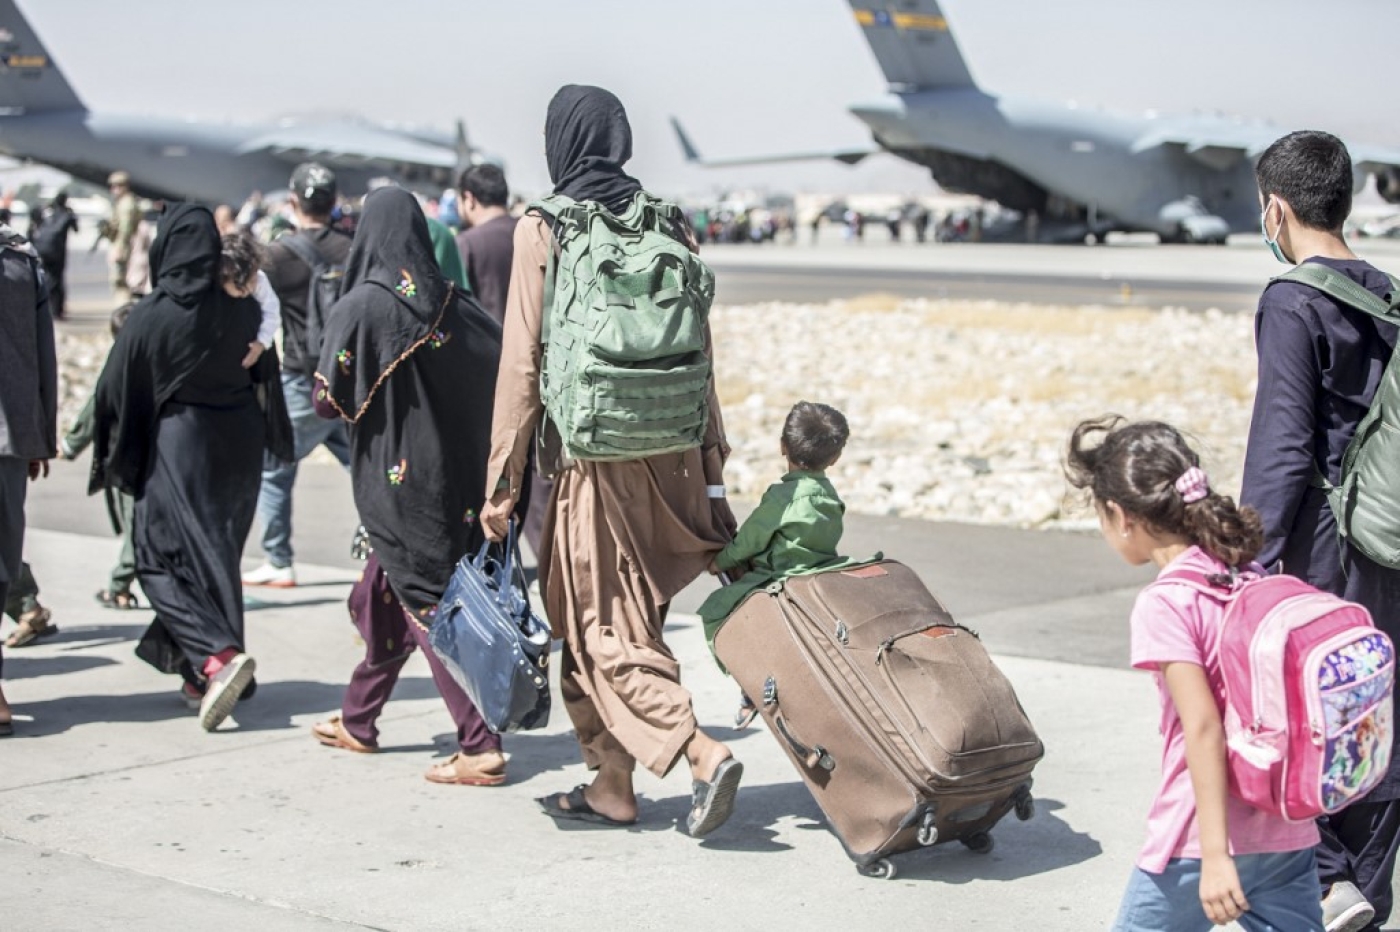 Afghan civilians head towards an aircraft during an evacuation at Hamid Karzai International Airport, Kabul, Afghanistan, on 24 August 2021.